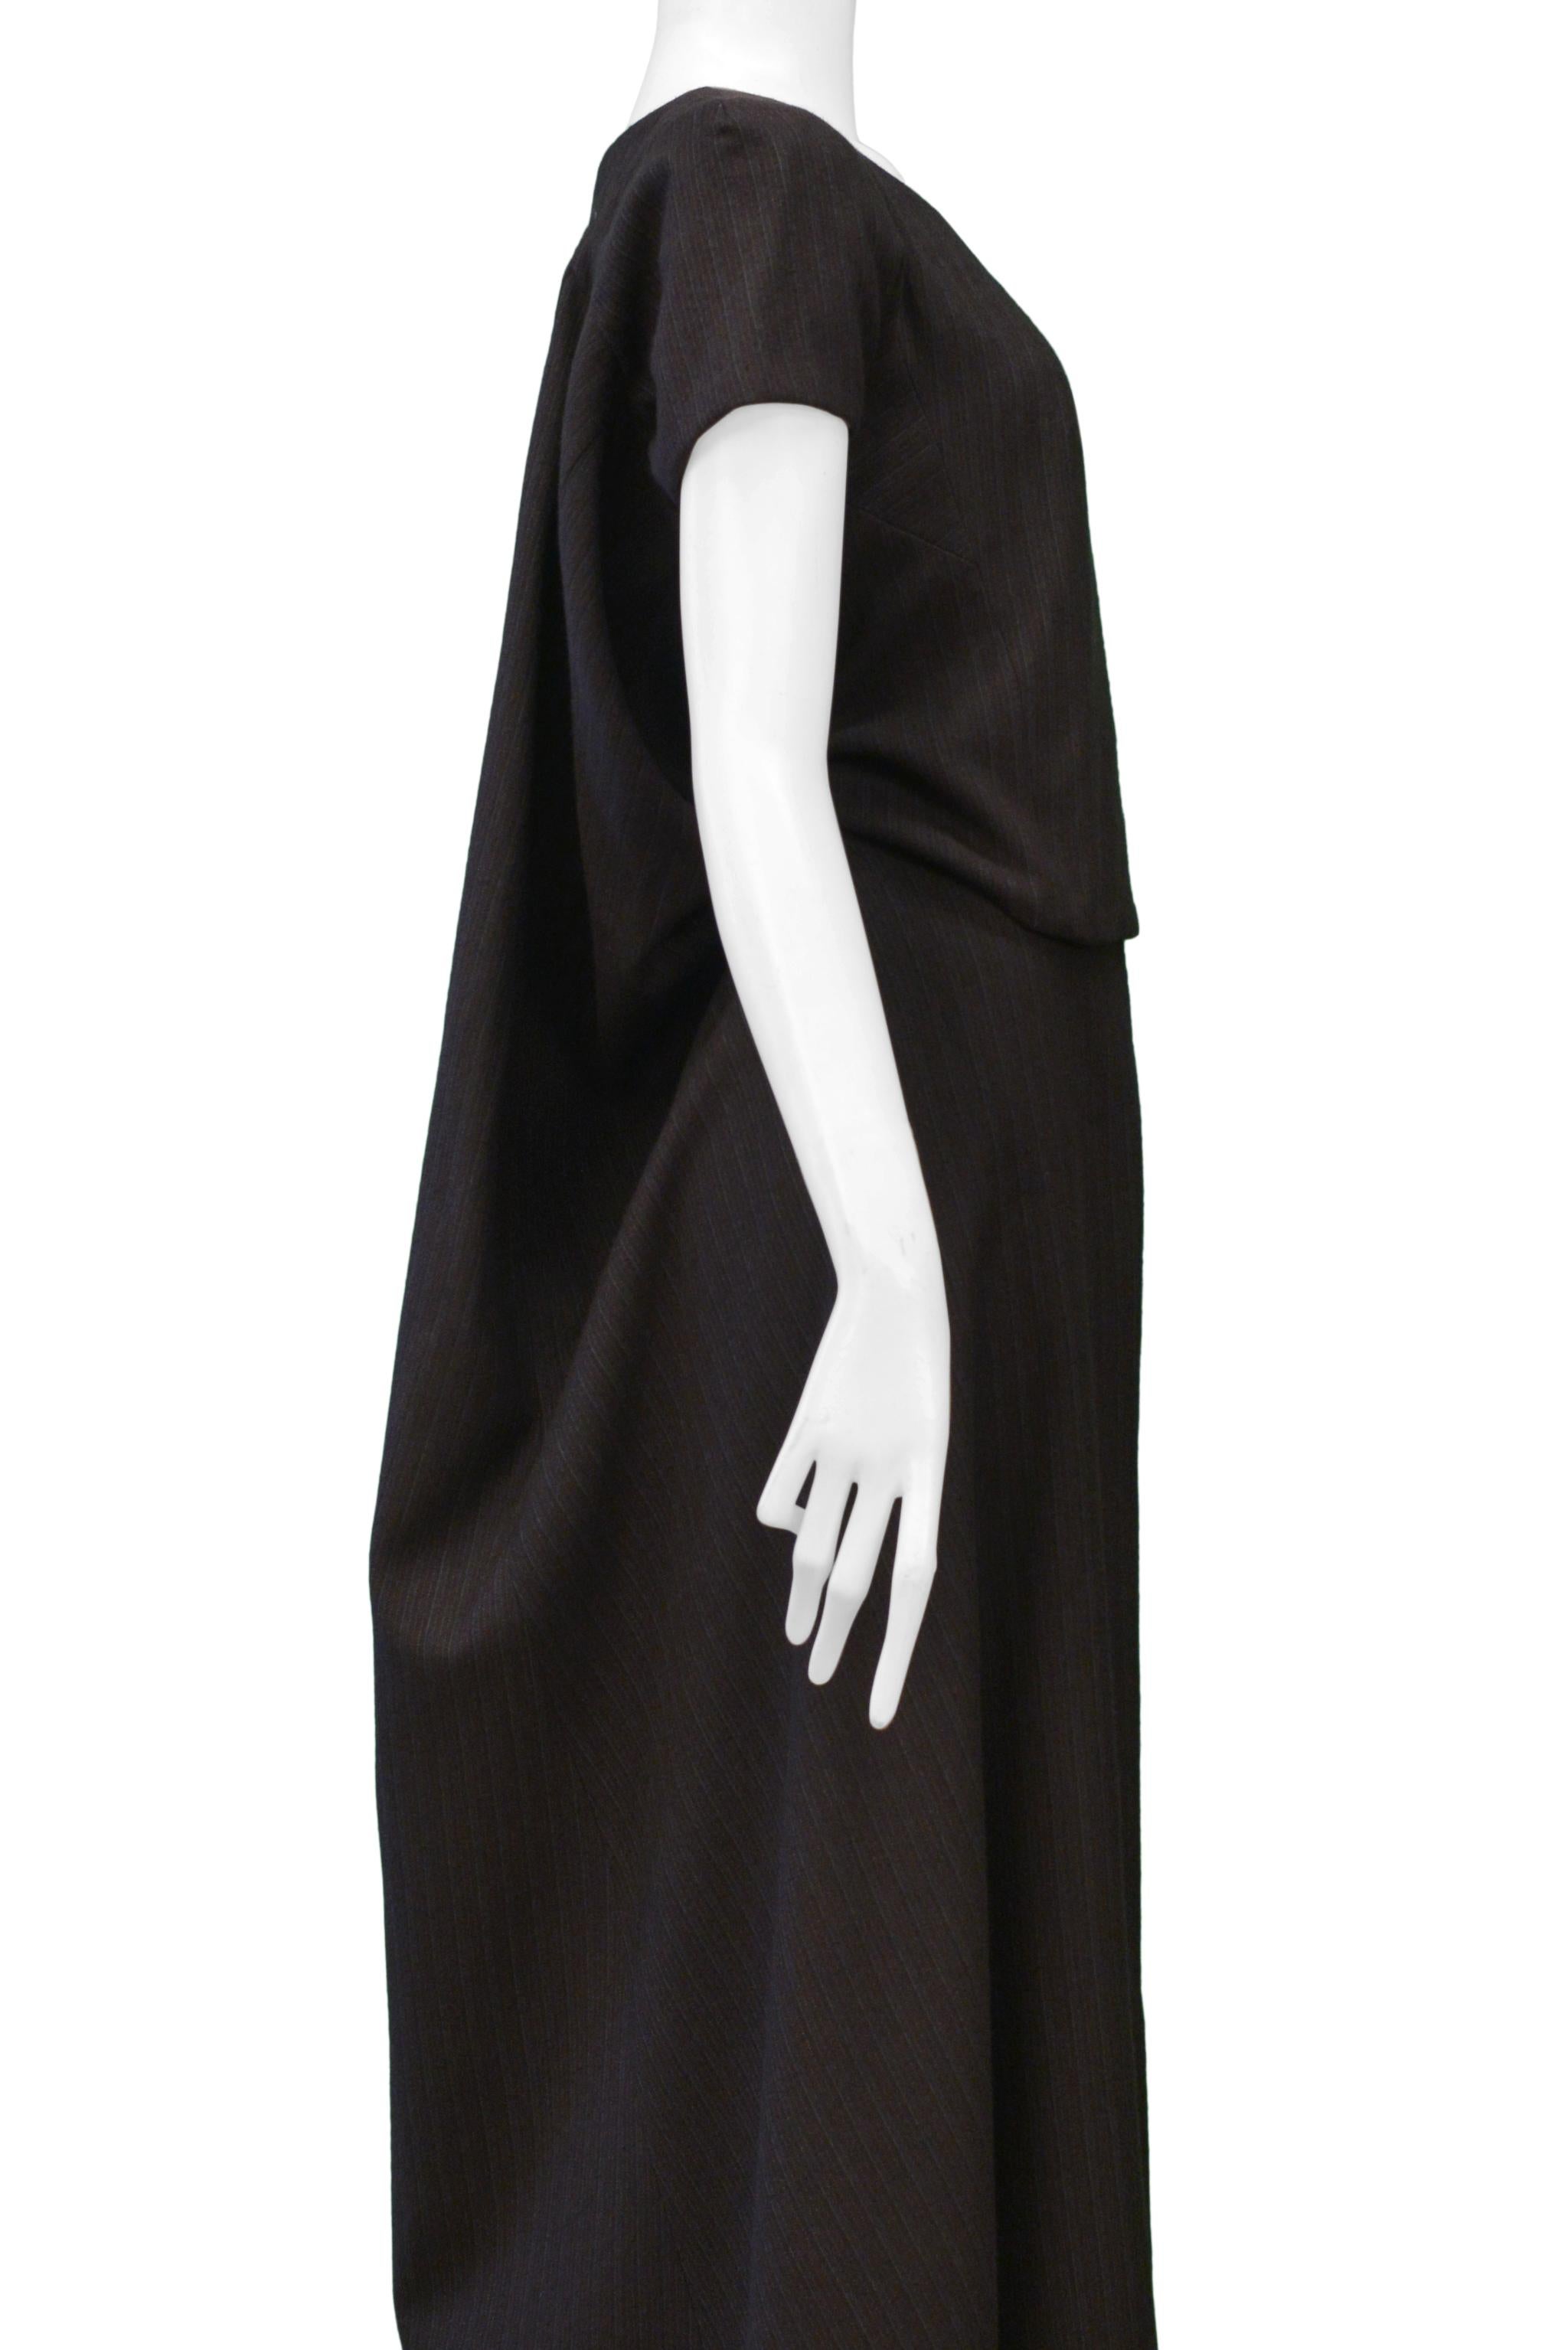 Junya Watanabe Brown Wool Pinstripe Concept Maxi Dress 1996 For Sale 5